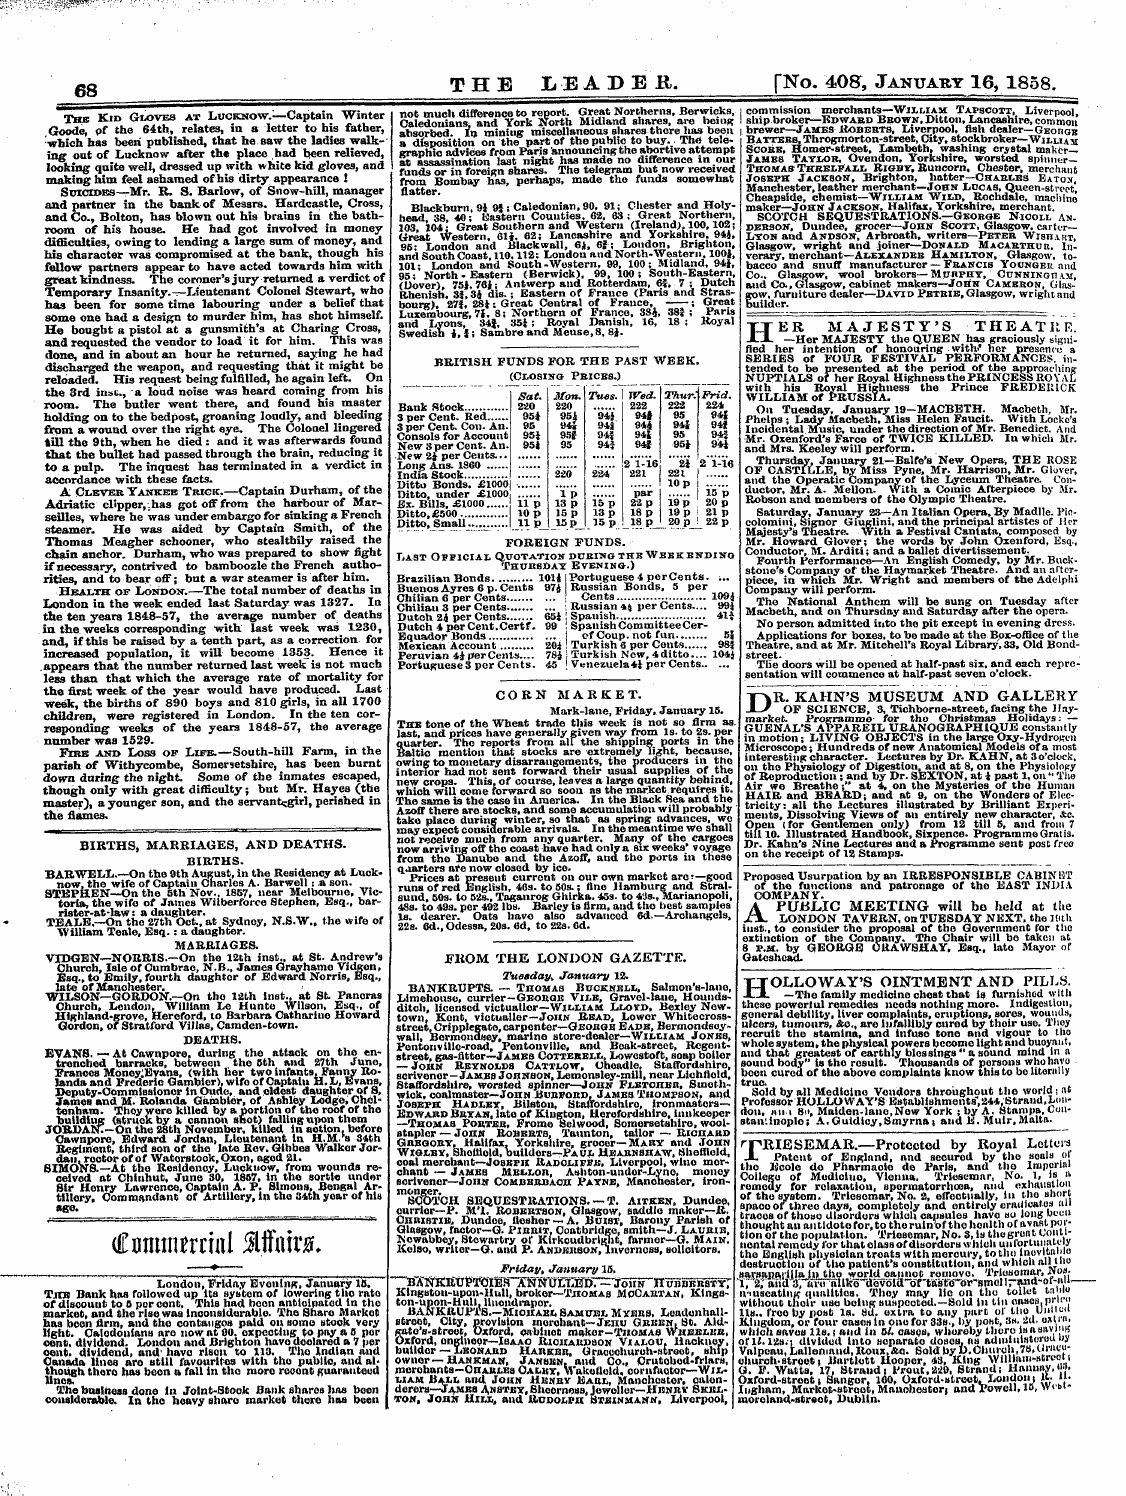 Leader (1850-1860): jS F Y, 2nd edition - Jfkom The London Gazette. Tuesday, Janua...